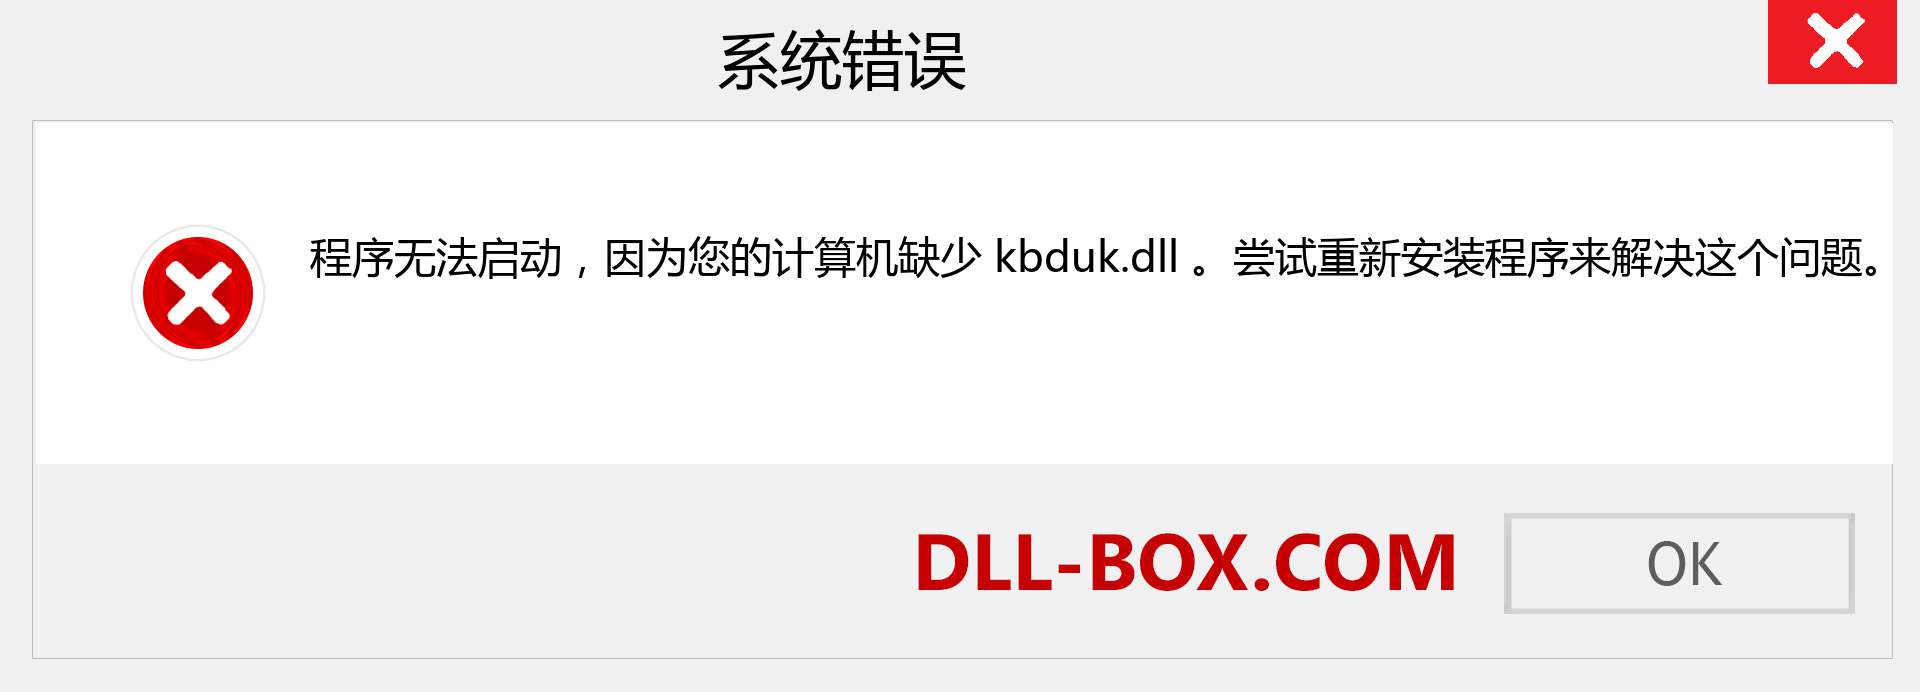 kbduk.dll 文件丢失？。 适用于 Windows 7、8、10 的下载 - 修复 Windows、照片、图像上的 kbduk dll 丢失错误